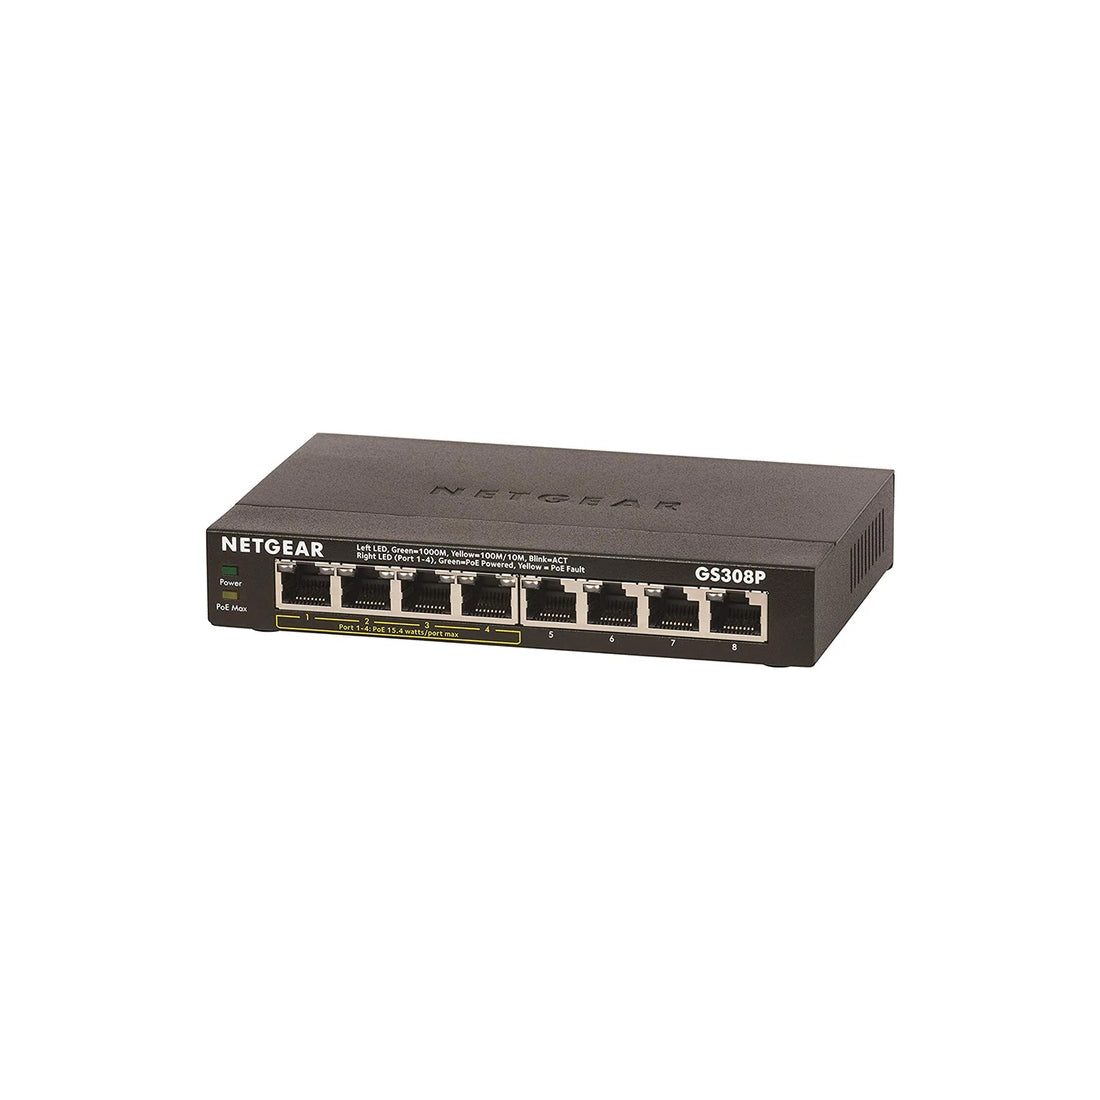 NETGEAR SOHO Ethernet GS308P 8 Port Unmanaged Network Hub